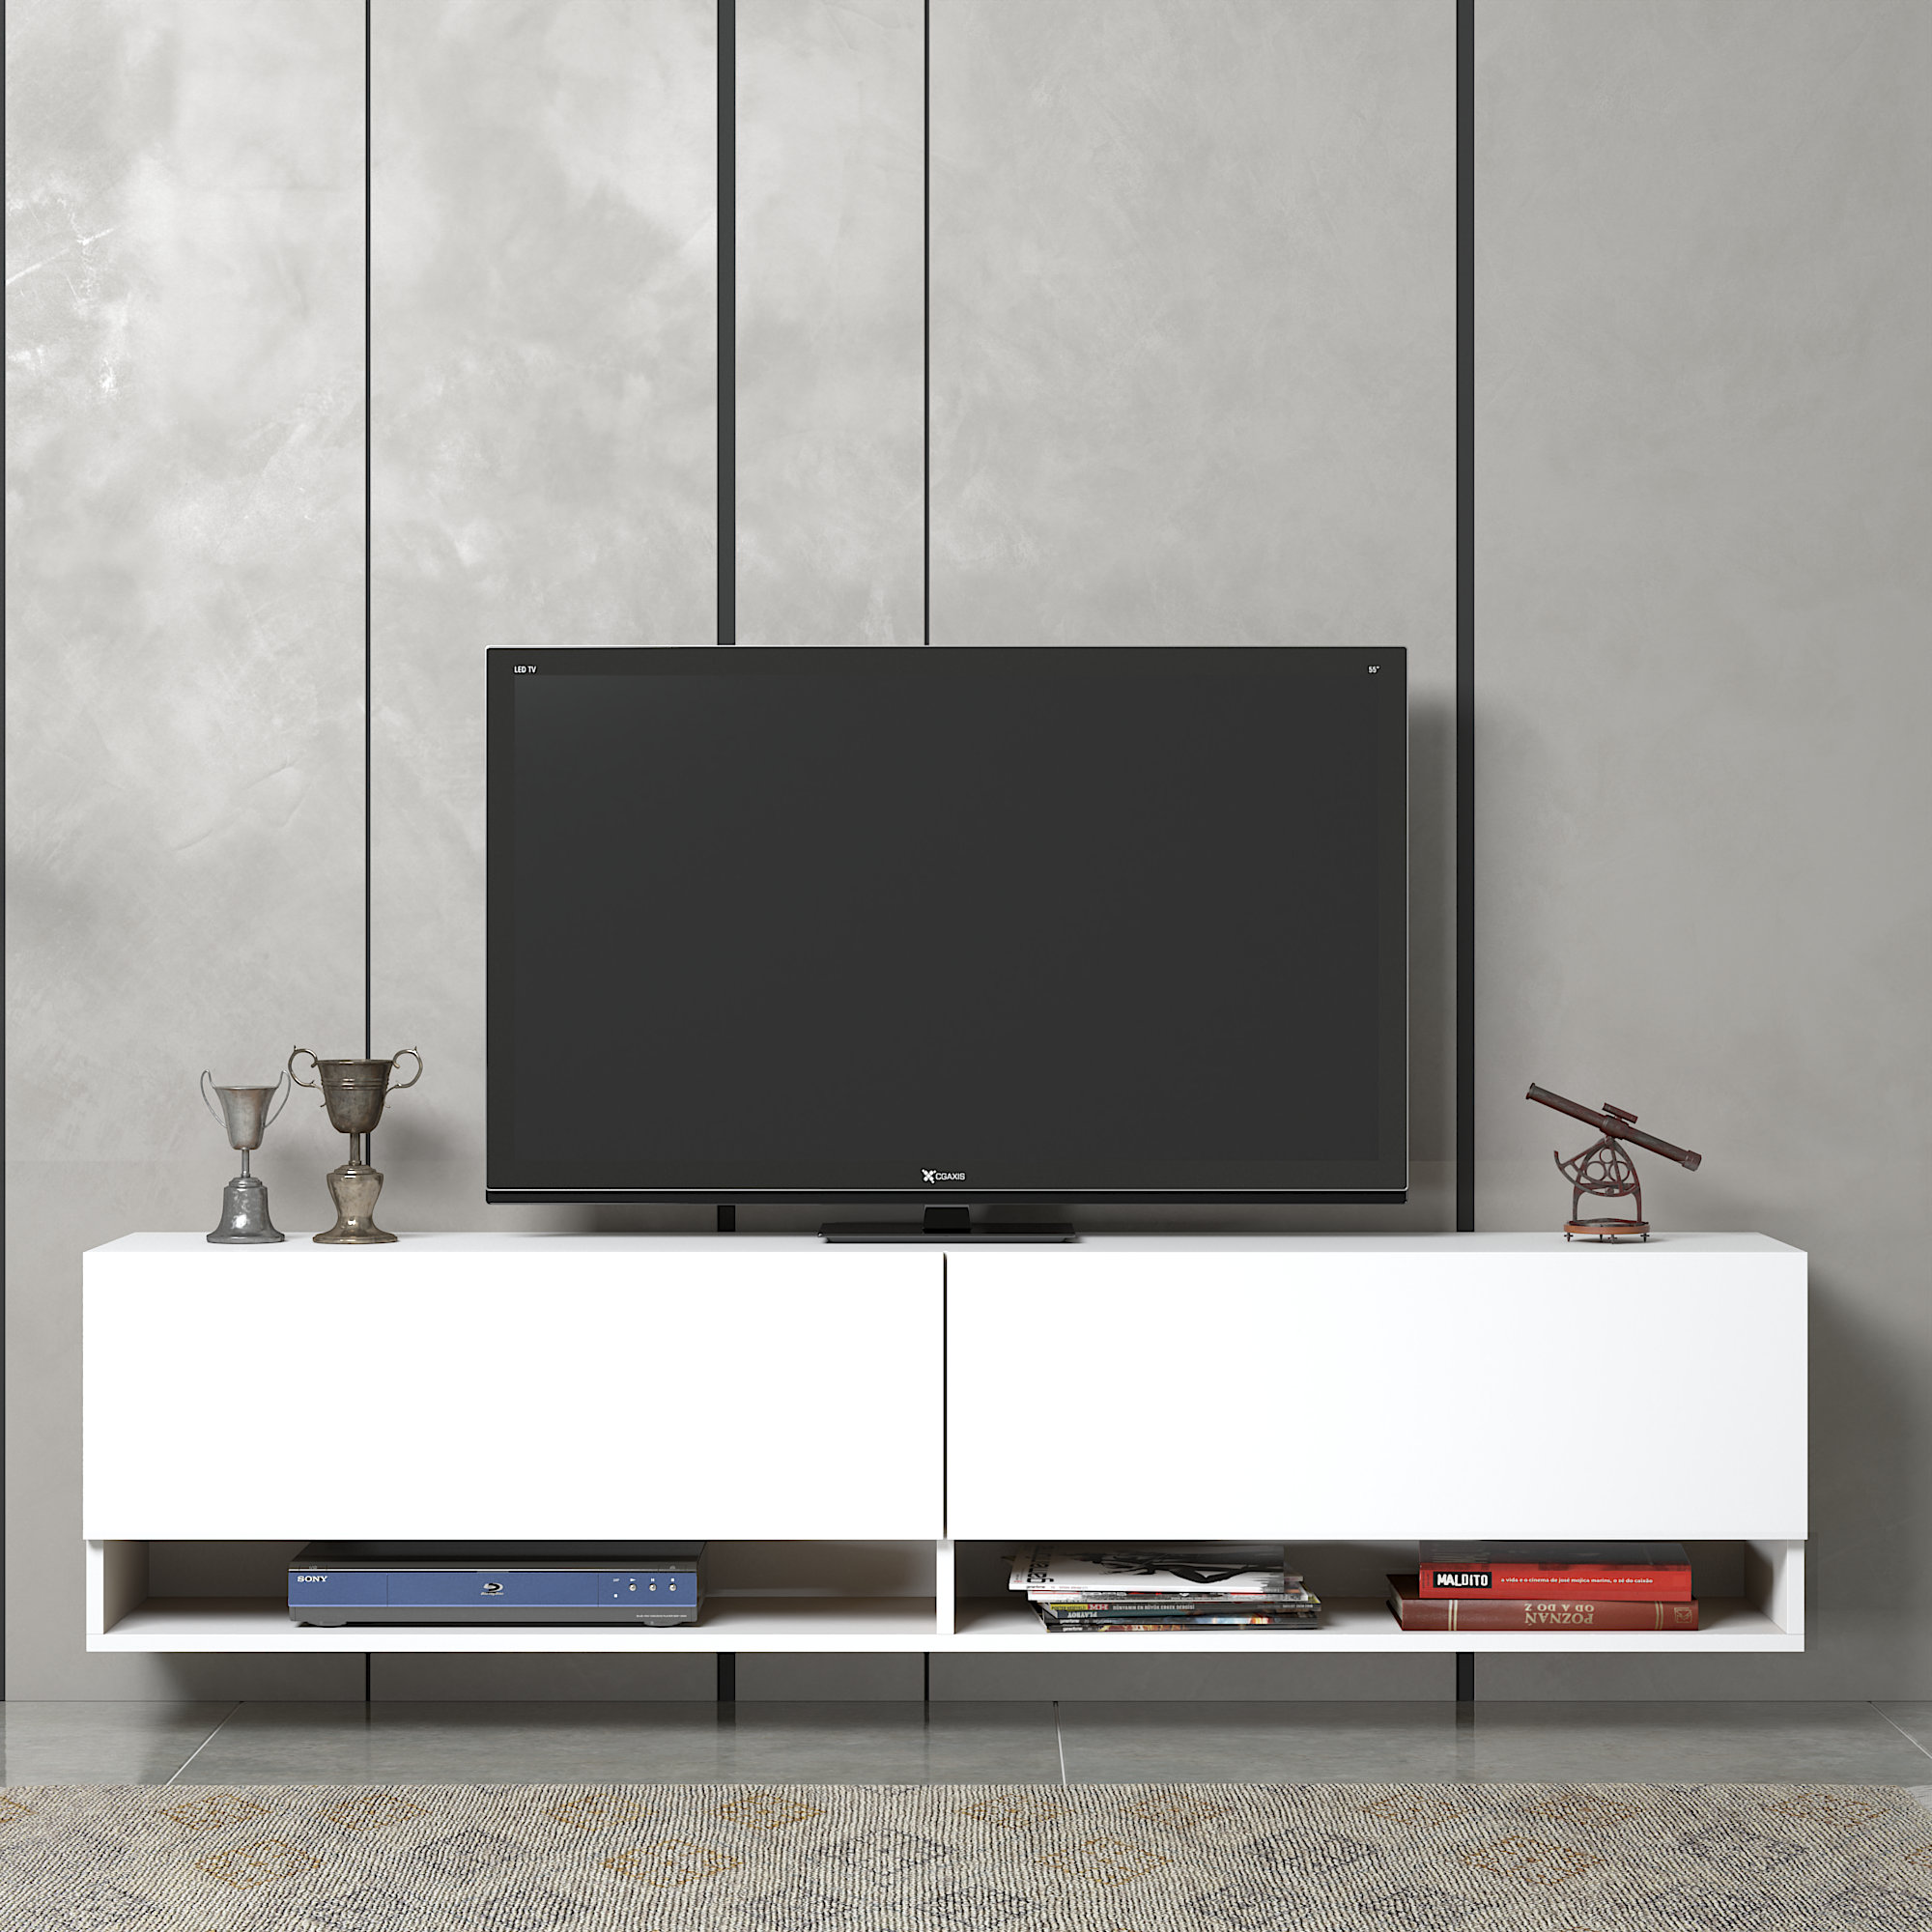 70 LED Floating TV Cabinet, Wall Mounted Modern TV Stand for 80 Inch TV,  Living Room Bedroom Media Furniture Under TV Console, Black